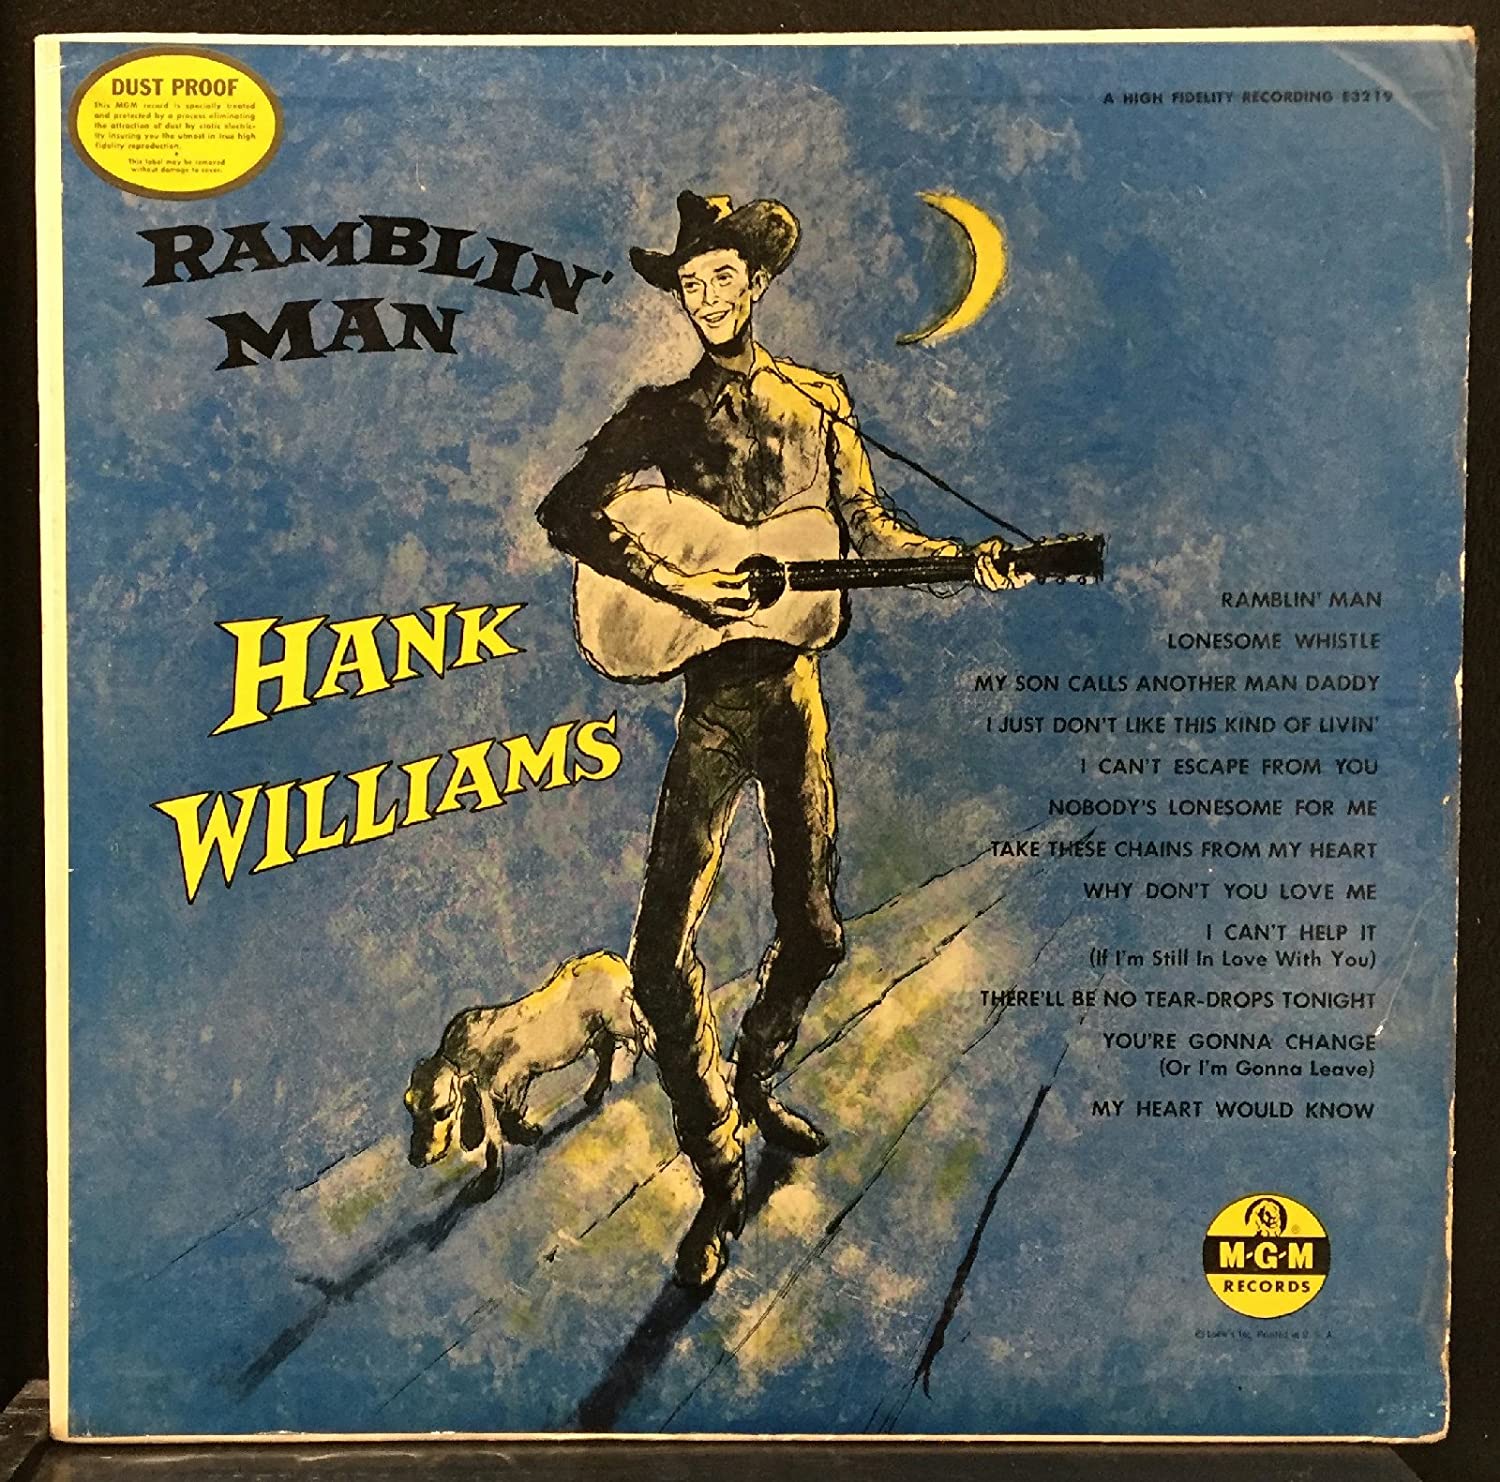 Hank Williams Ramblin Man Reviews Album of The Year